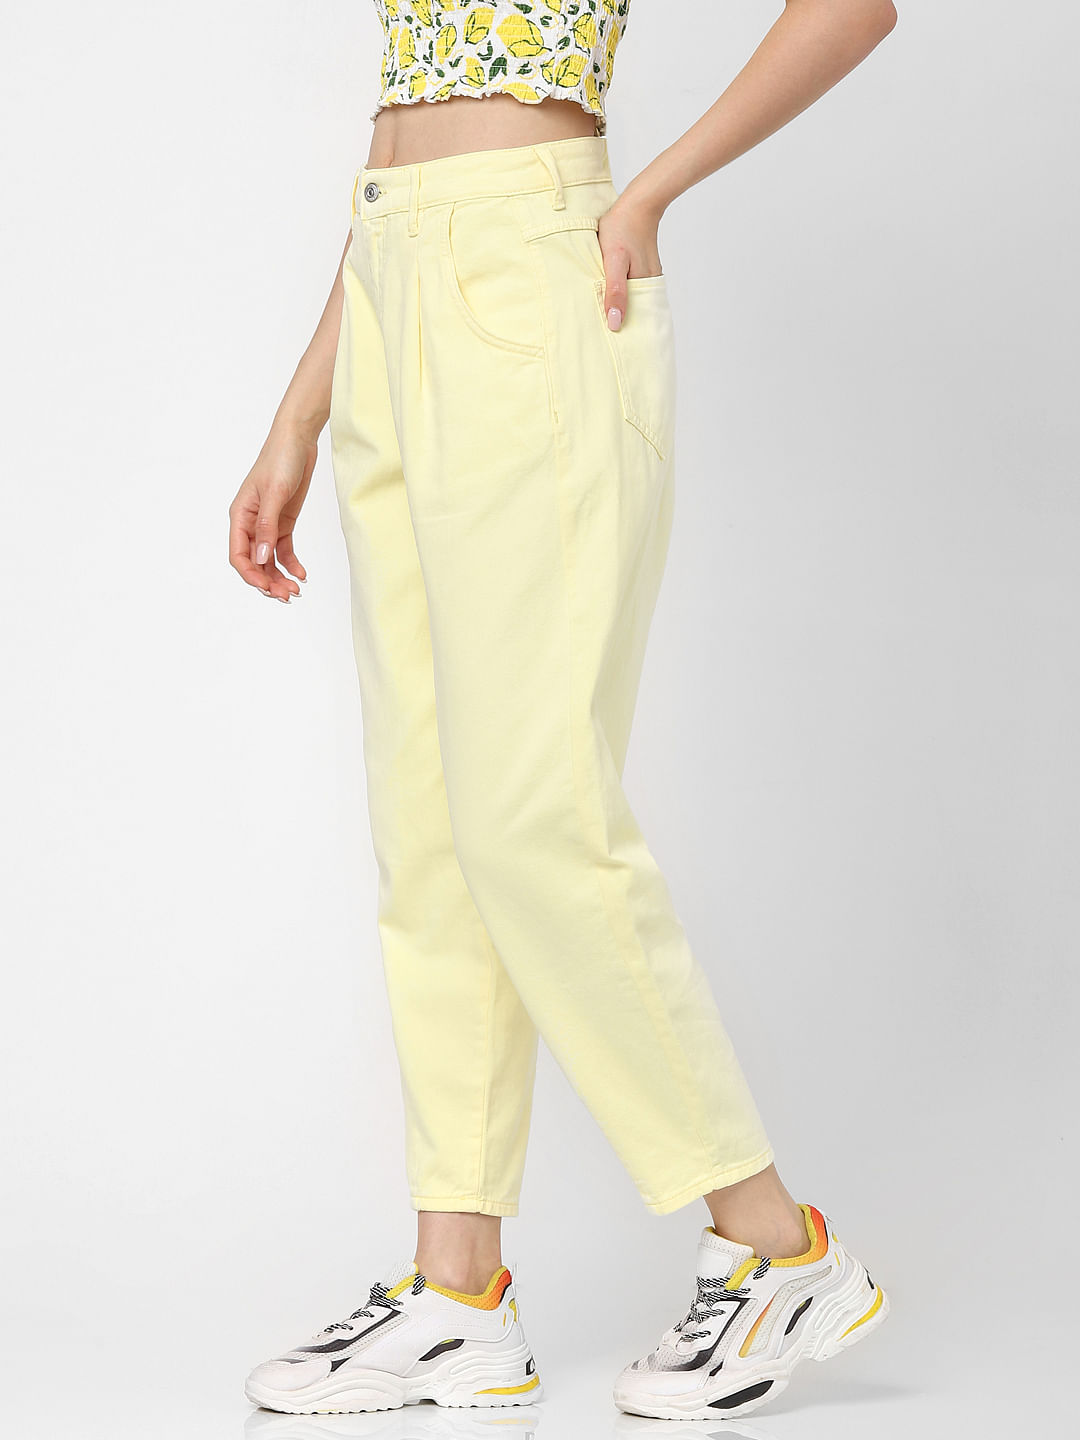 Women's Yellow Cotton Pant